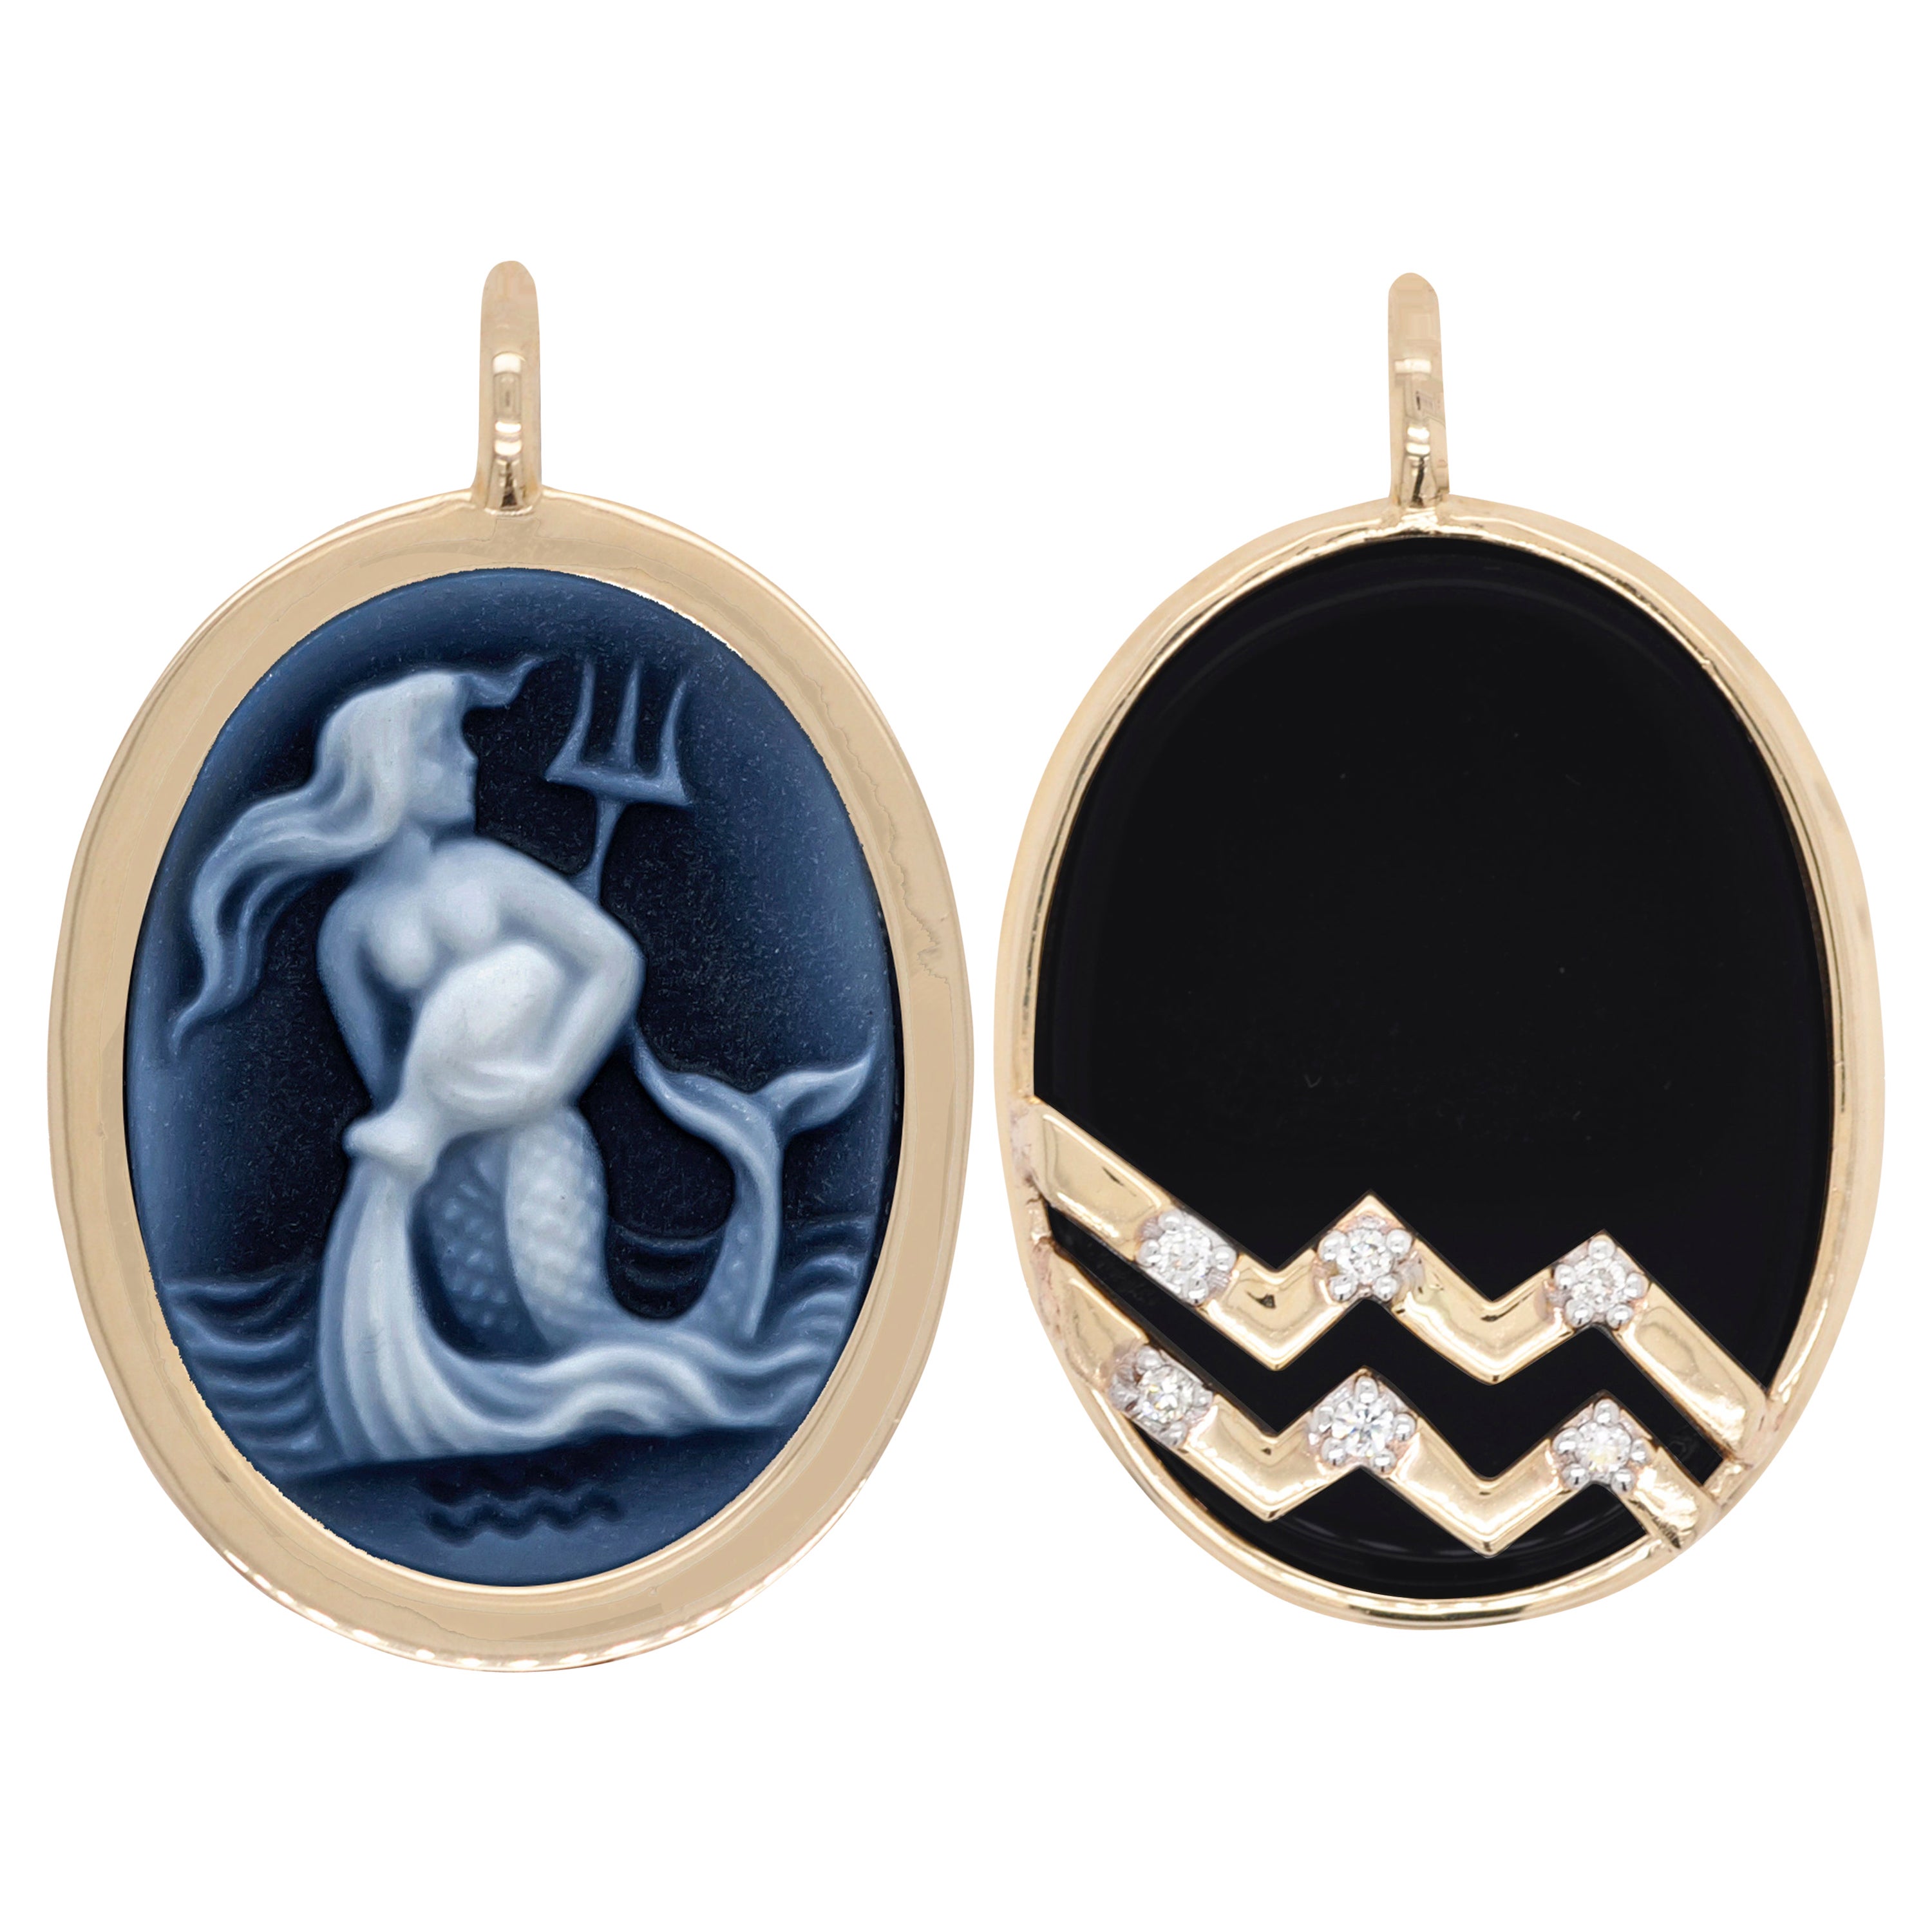 Reversible Aquarius Carving Cameo Zodiac Diamond 14 Karat Gold Pendant Necklace